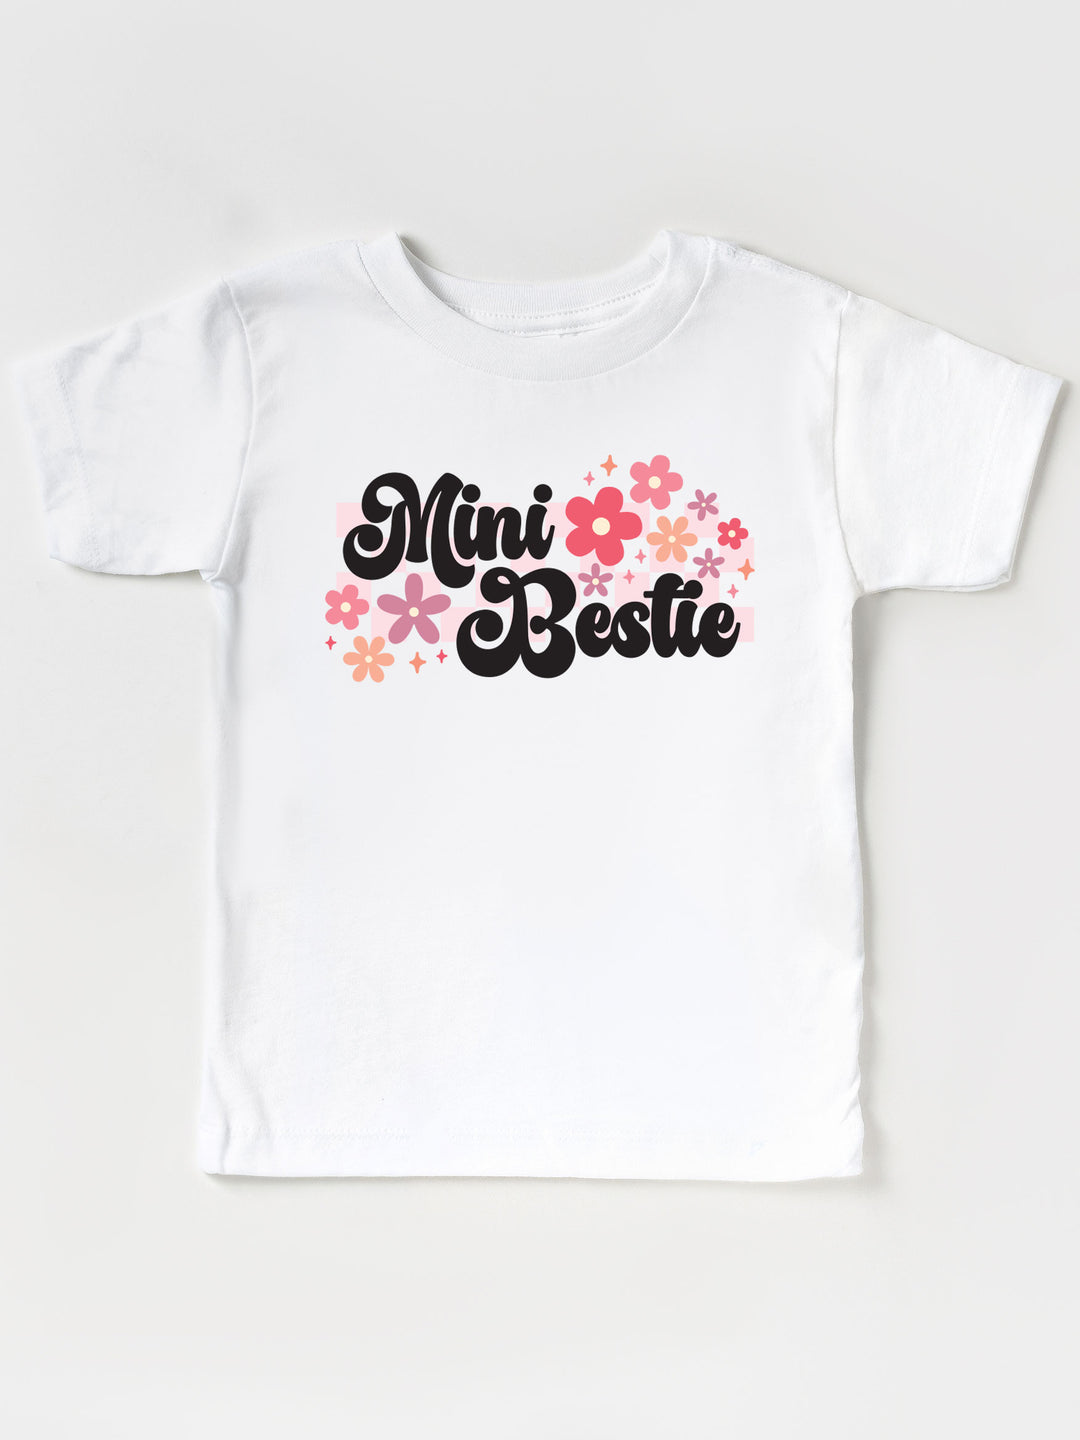 Mini Bestie Kids Graphic Tee